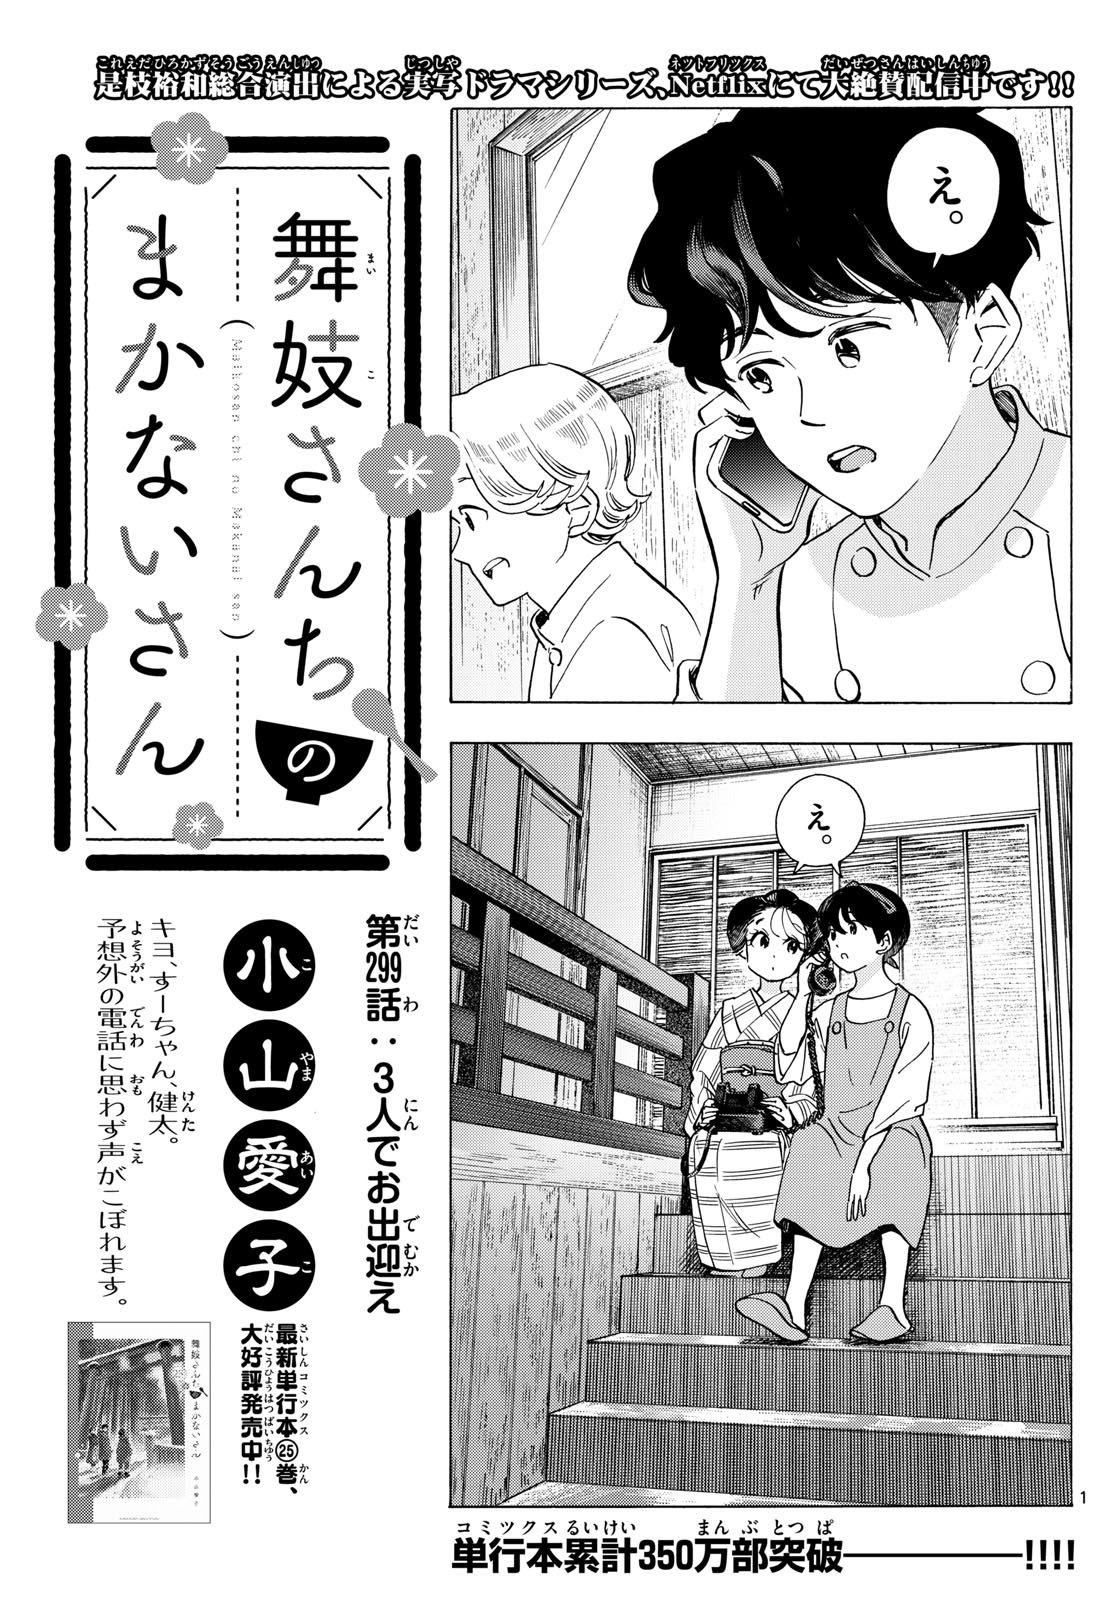 Maiko-san Chi no Makanai-san - Chapter 299 - Page 1